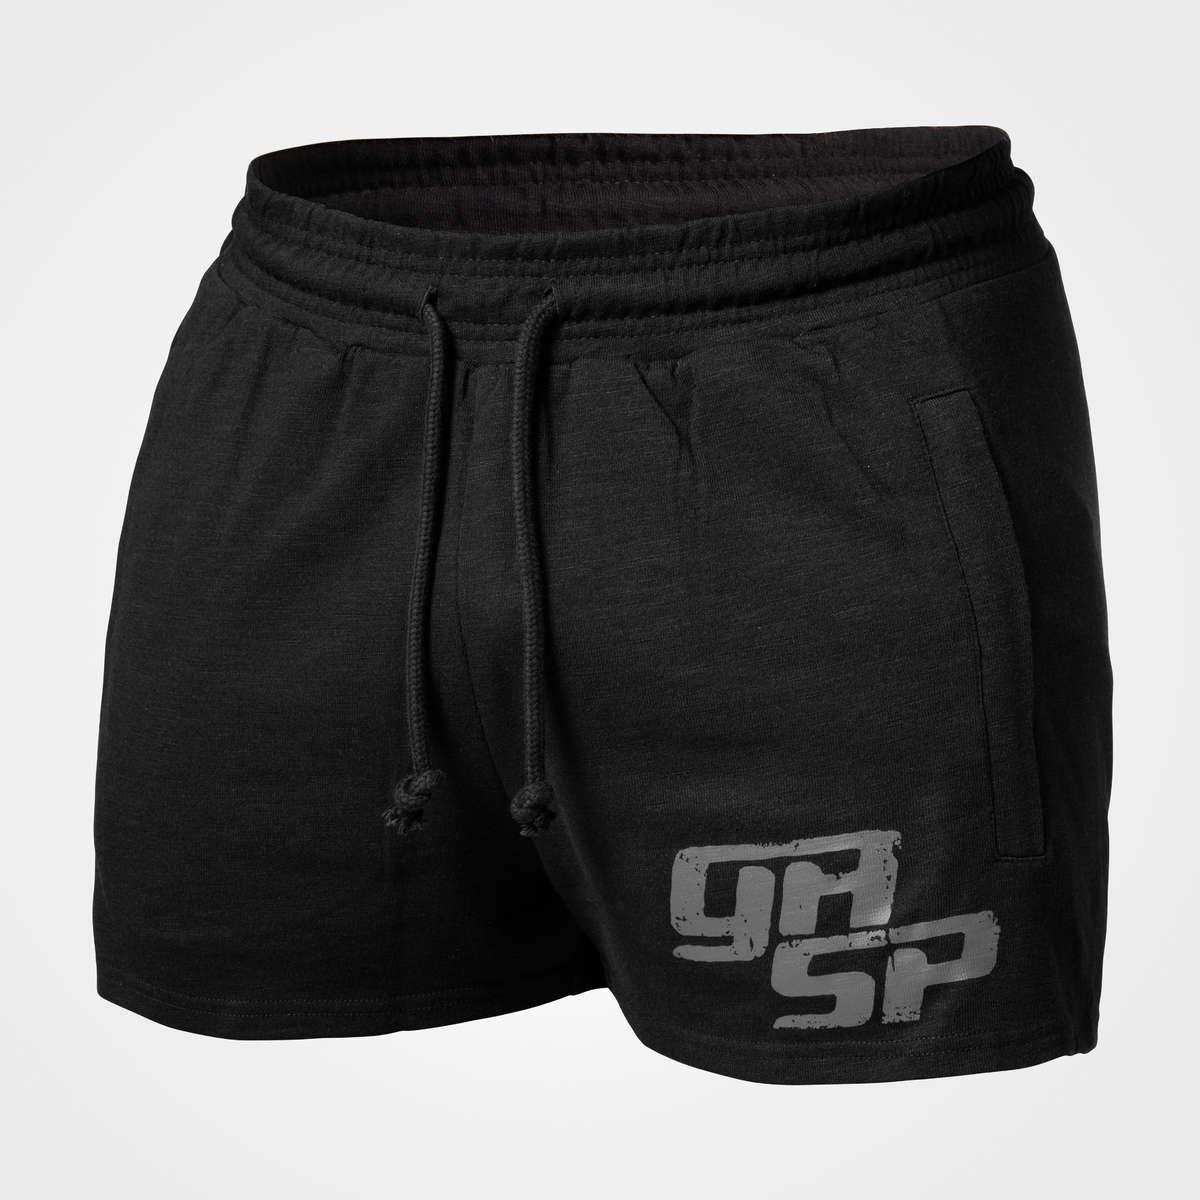 Pro GASP Shorts, Black